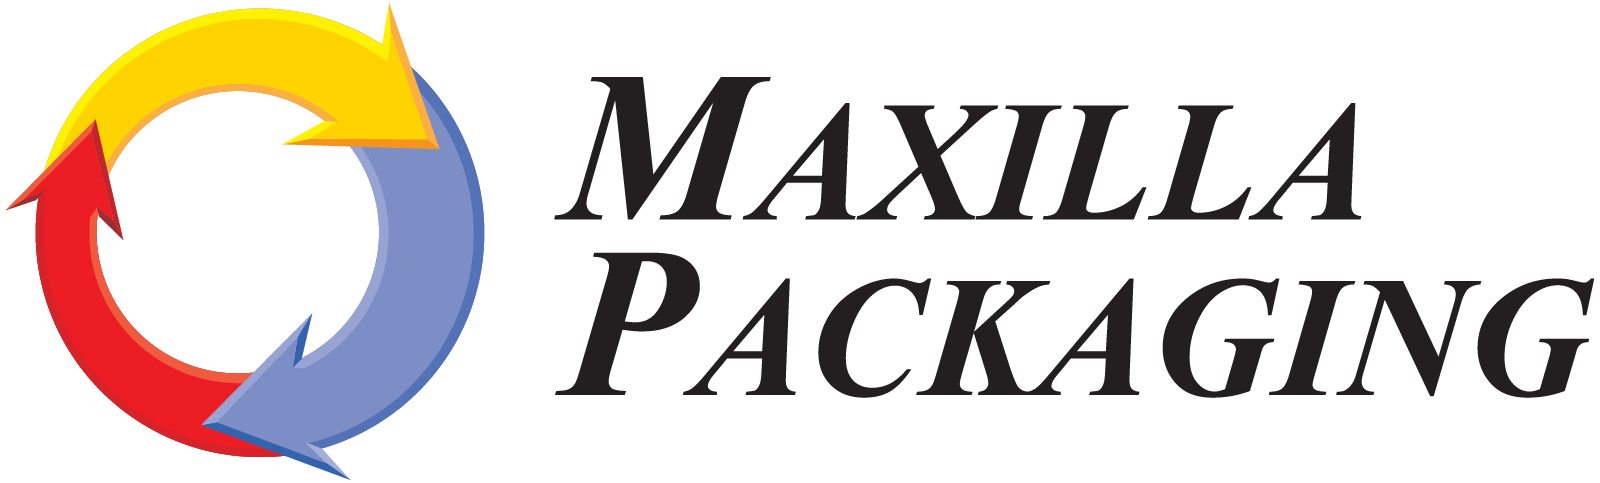 Packaging Logos | Packaging Logo Maker | BrandCrowd